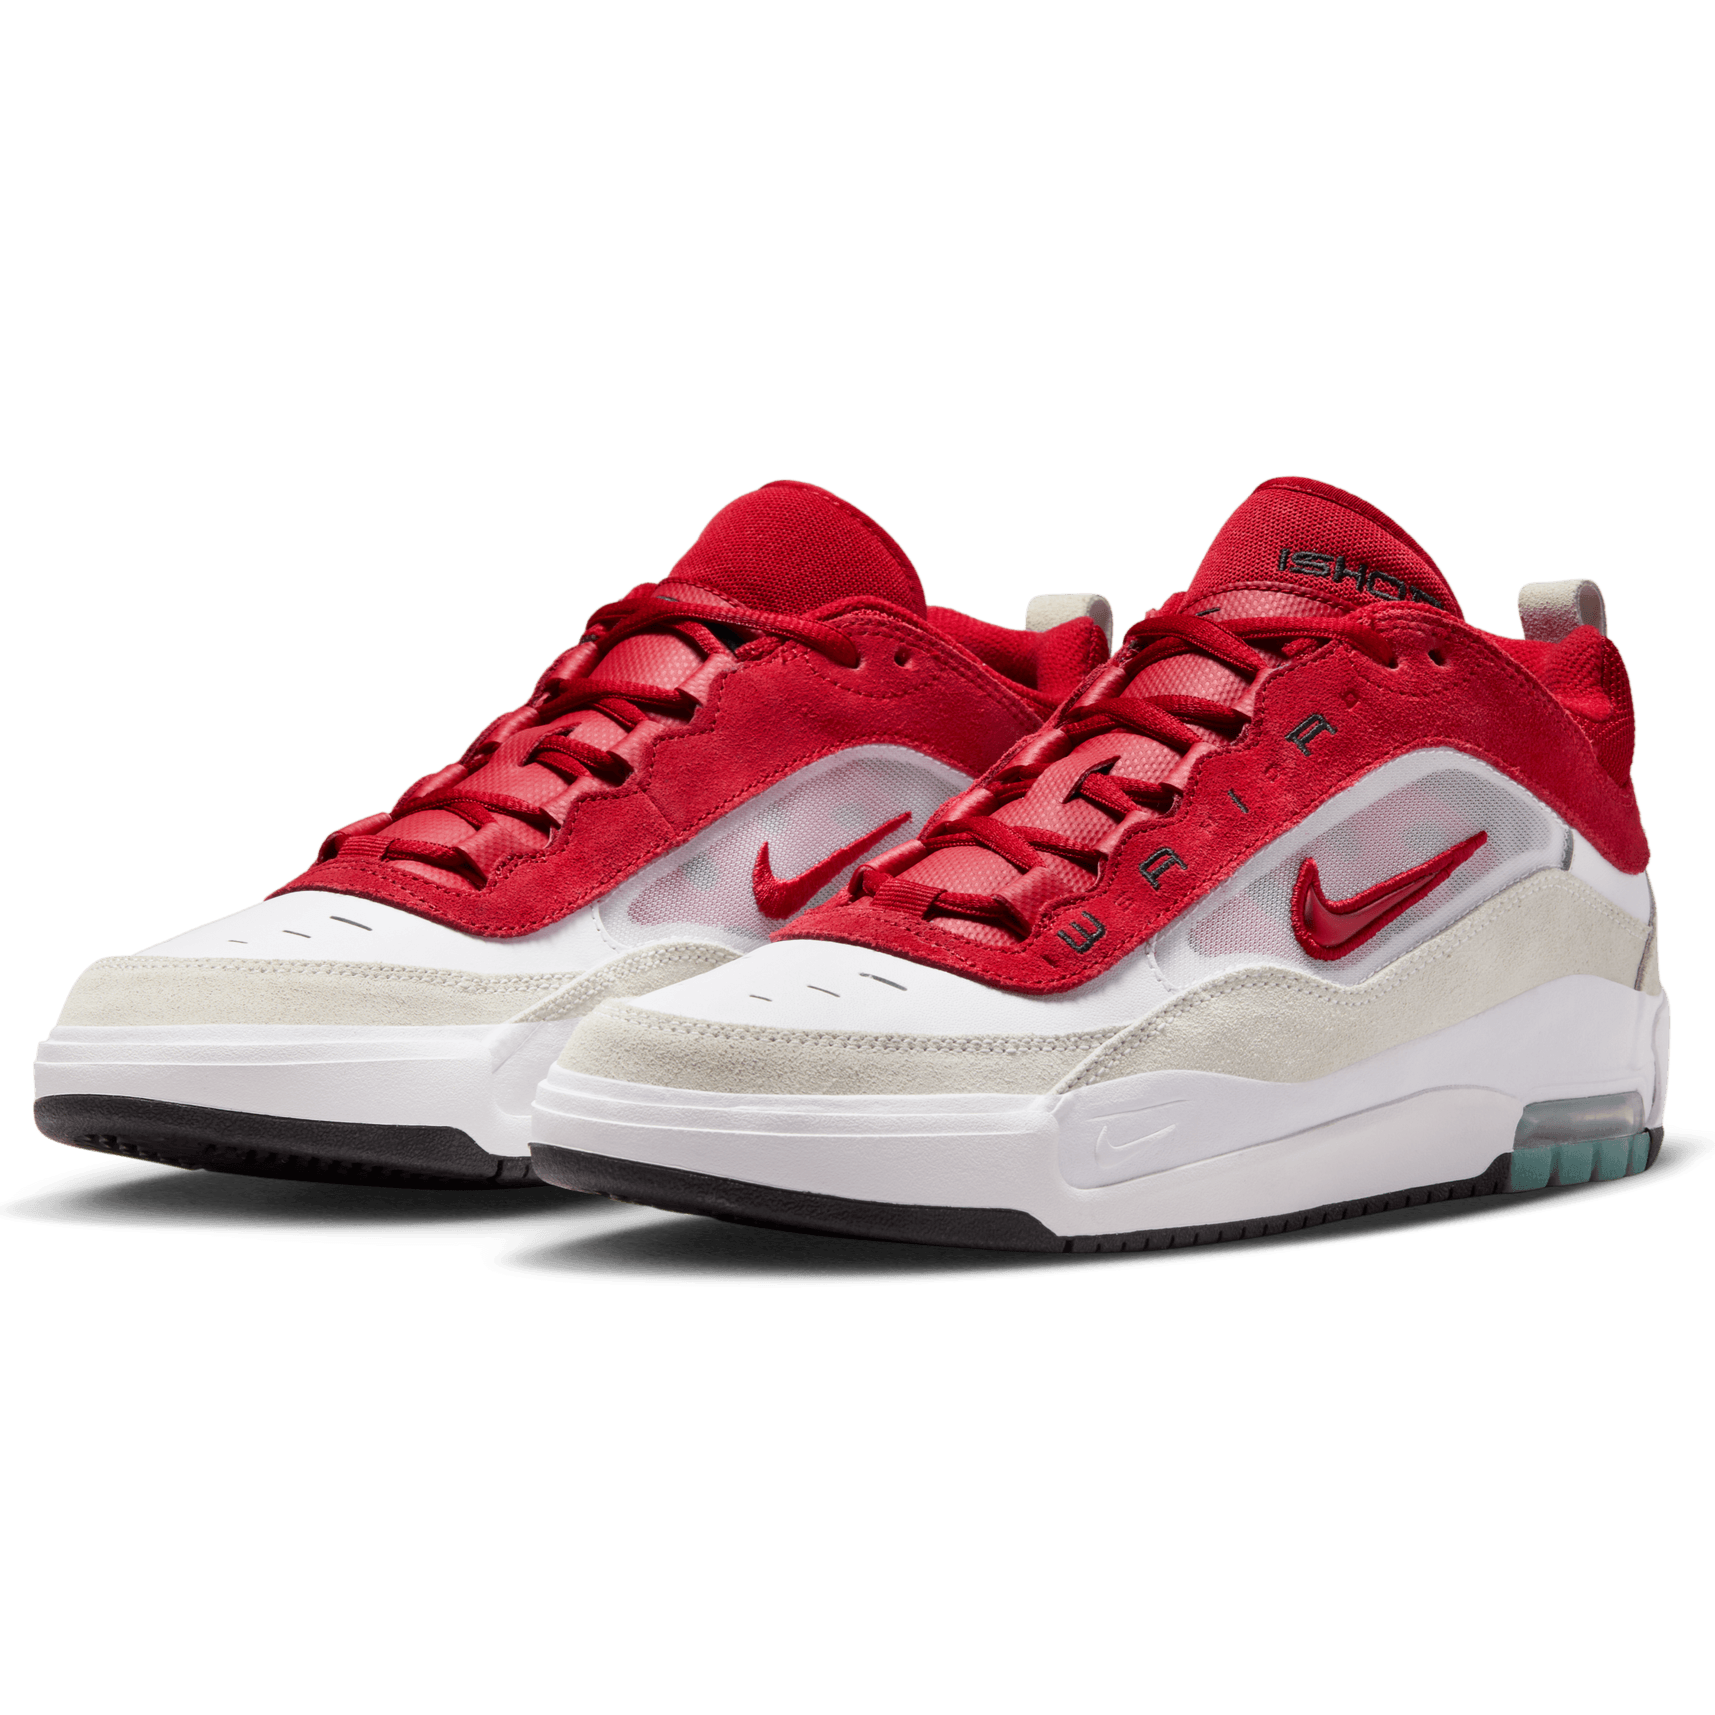 White/Varsity Red Air Max Ishod Wair Nike SB Skate Shoe Front